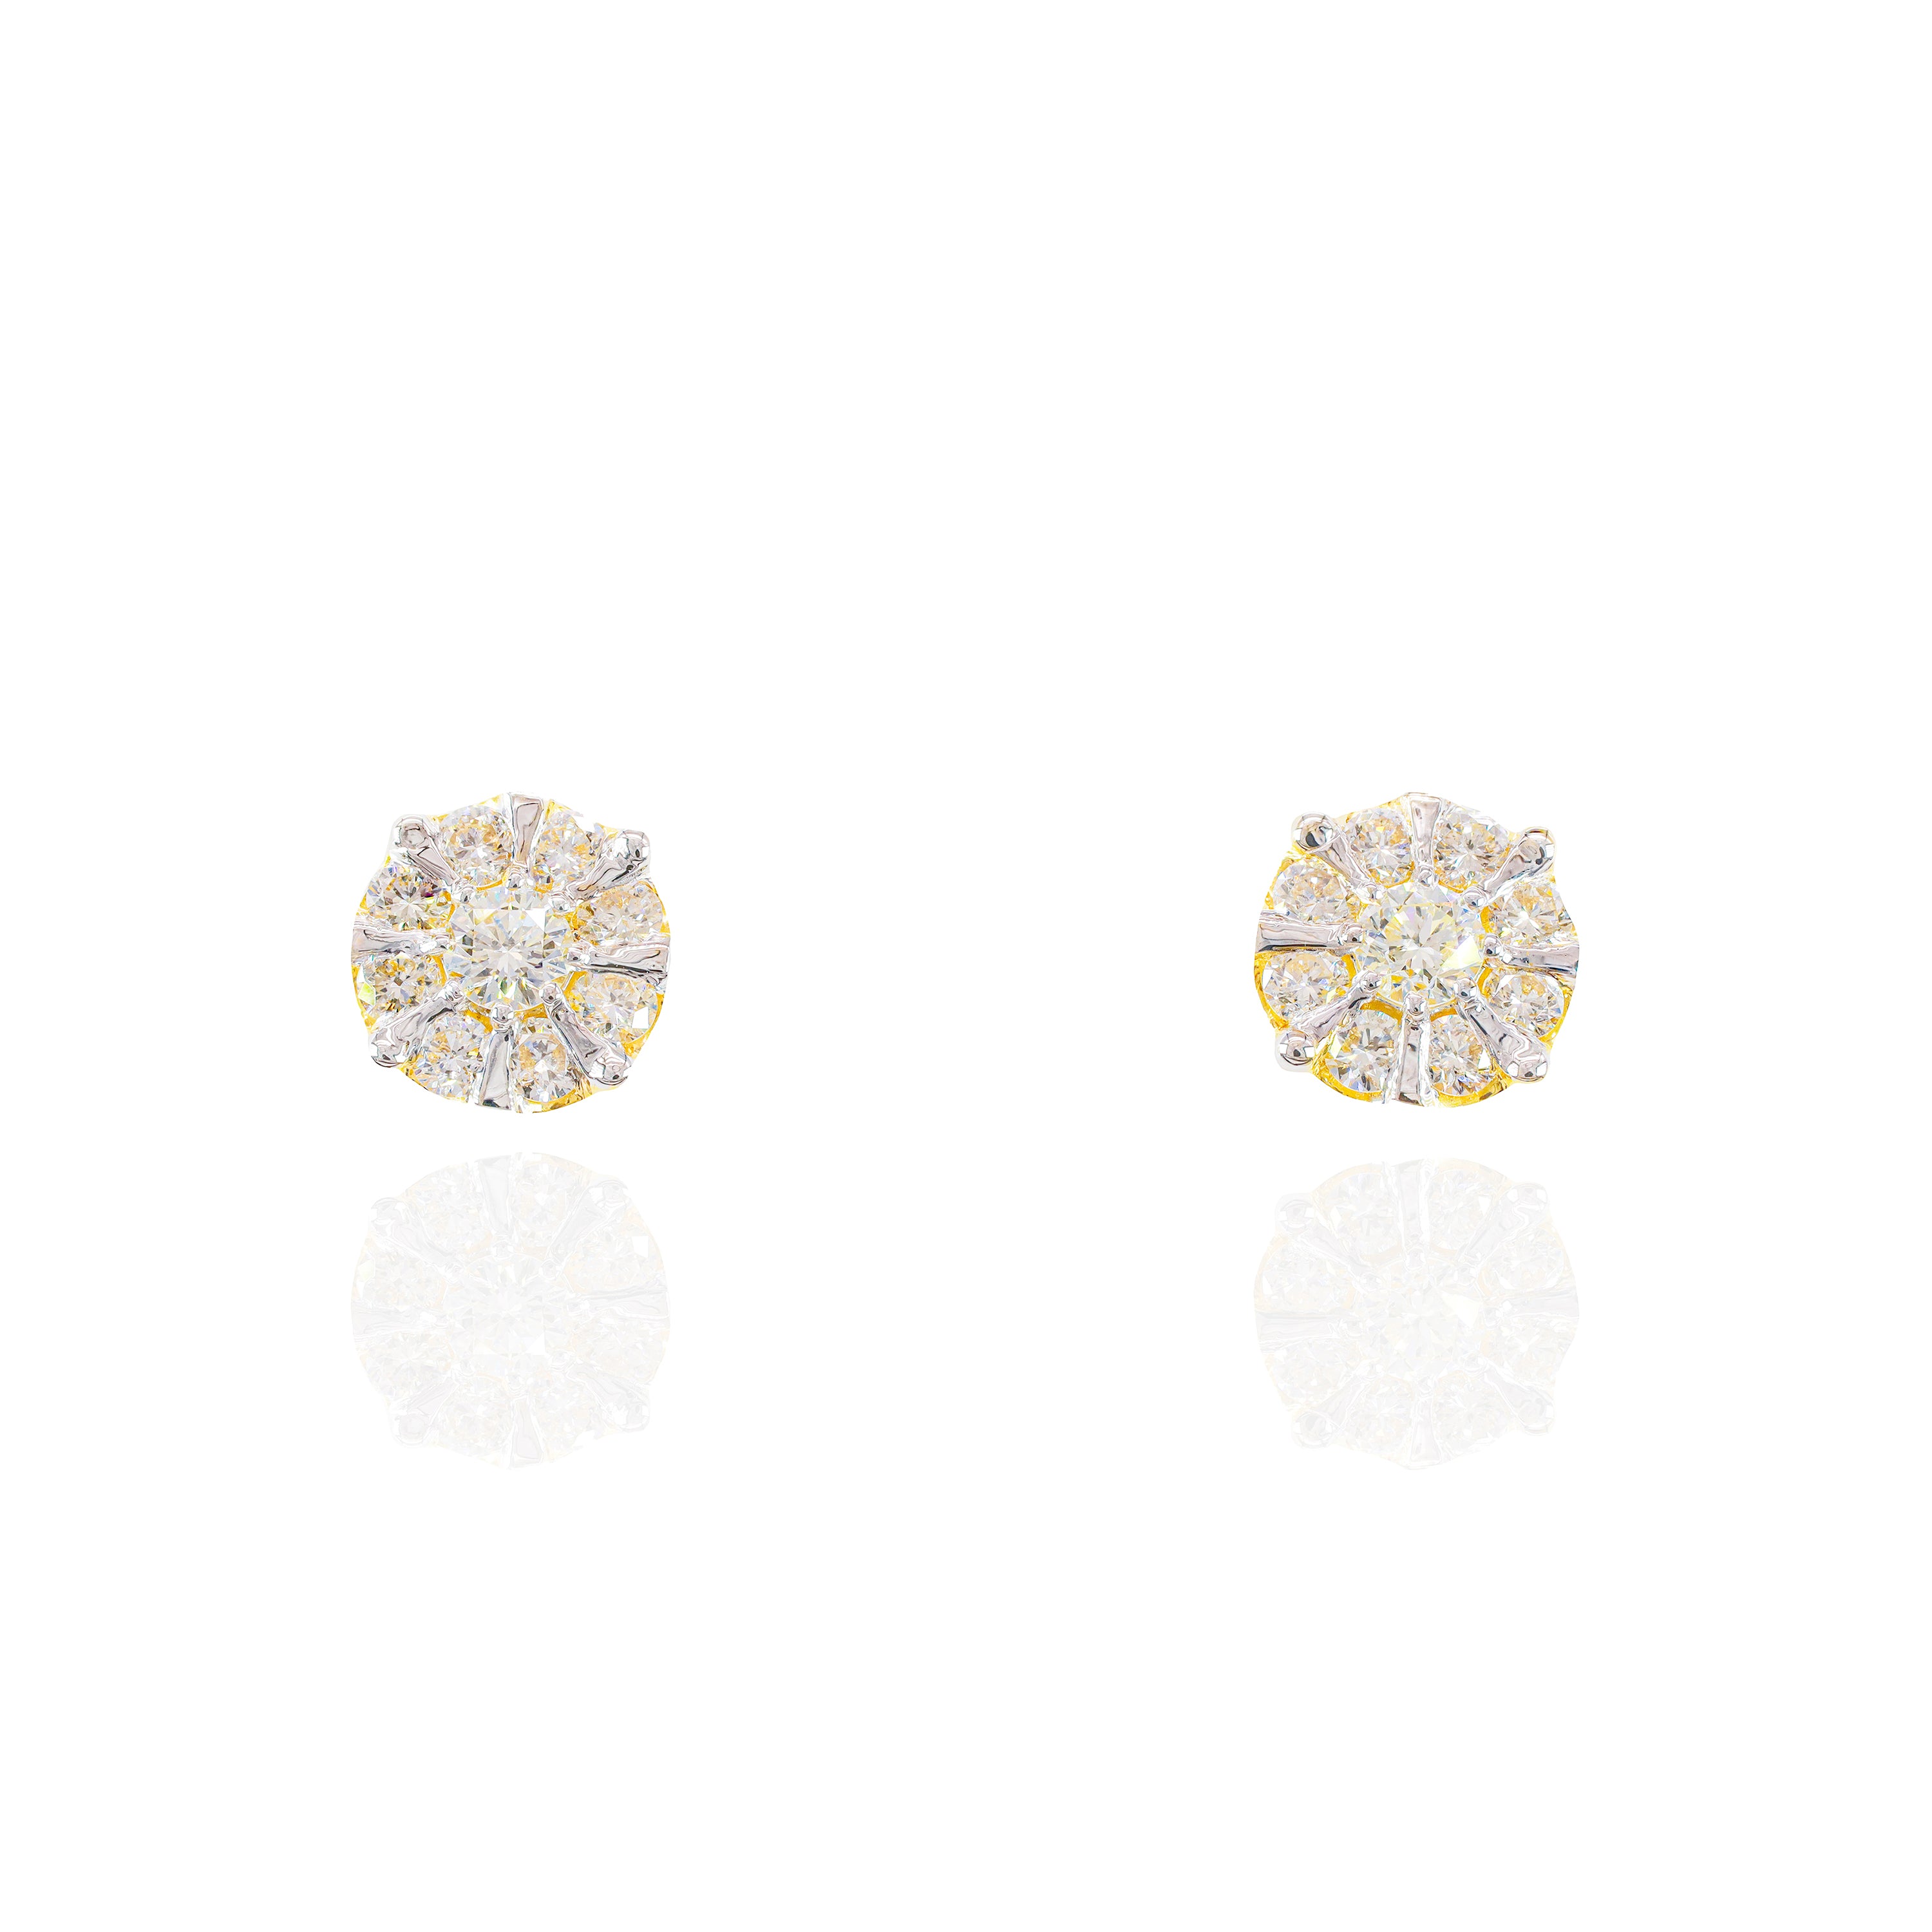 Large Center Diamond Earrings w/ Gold & Diamond Border